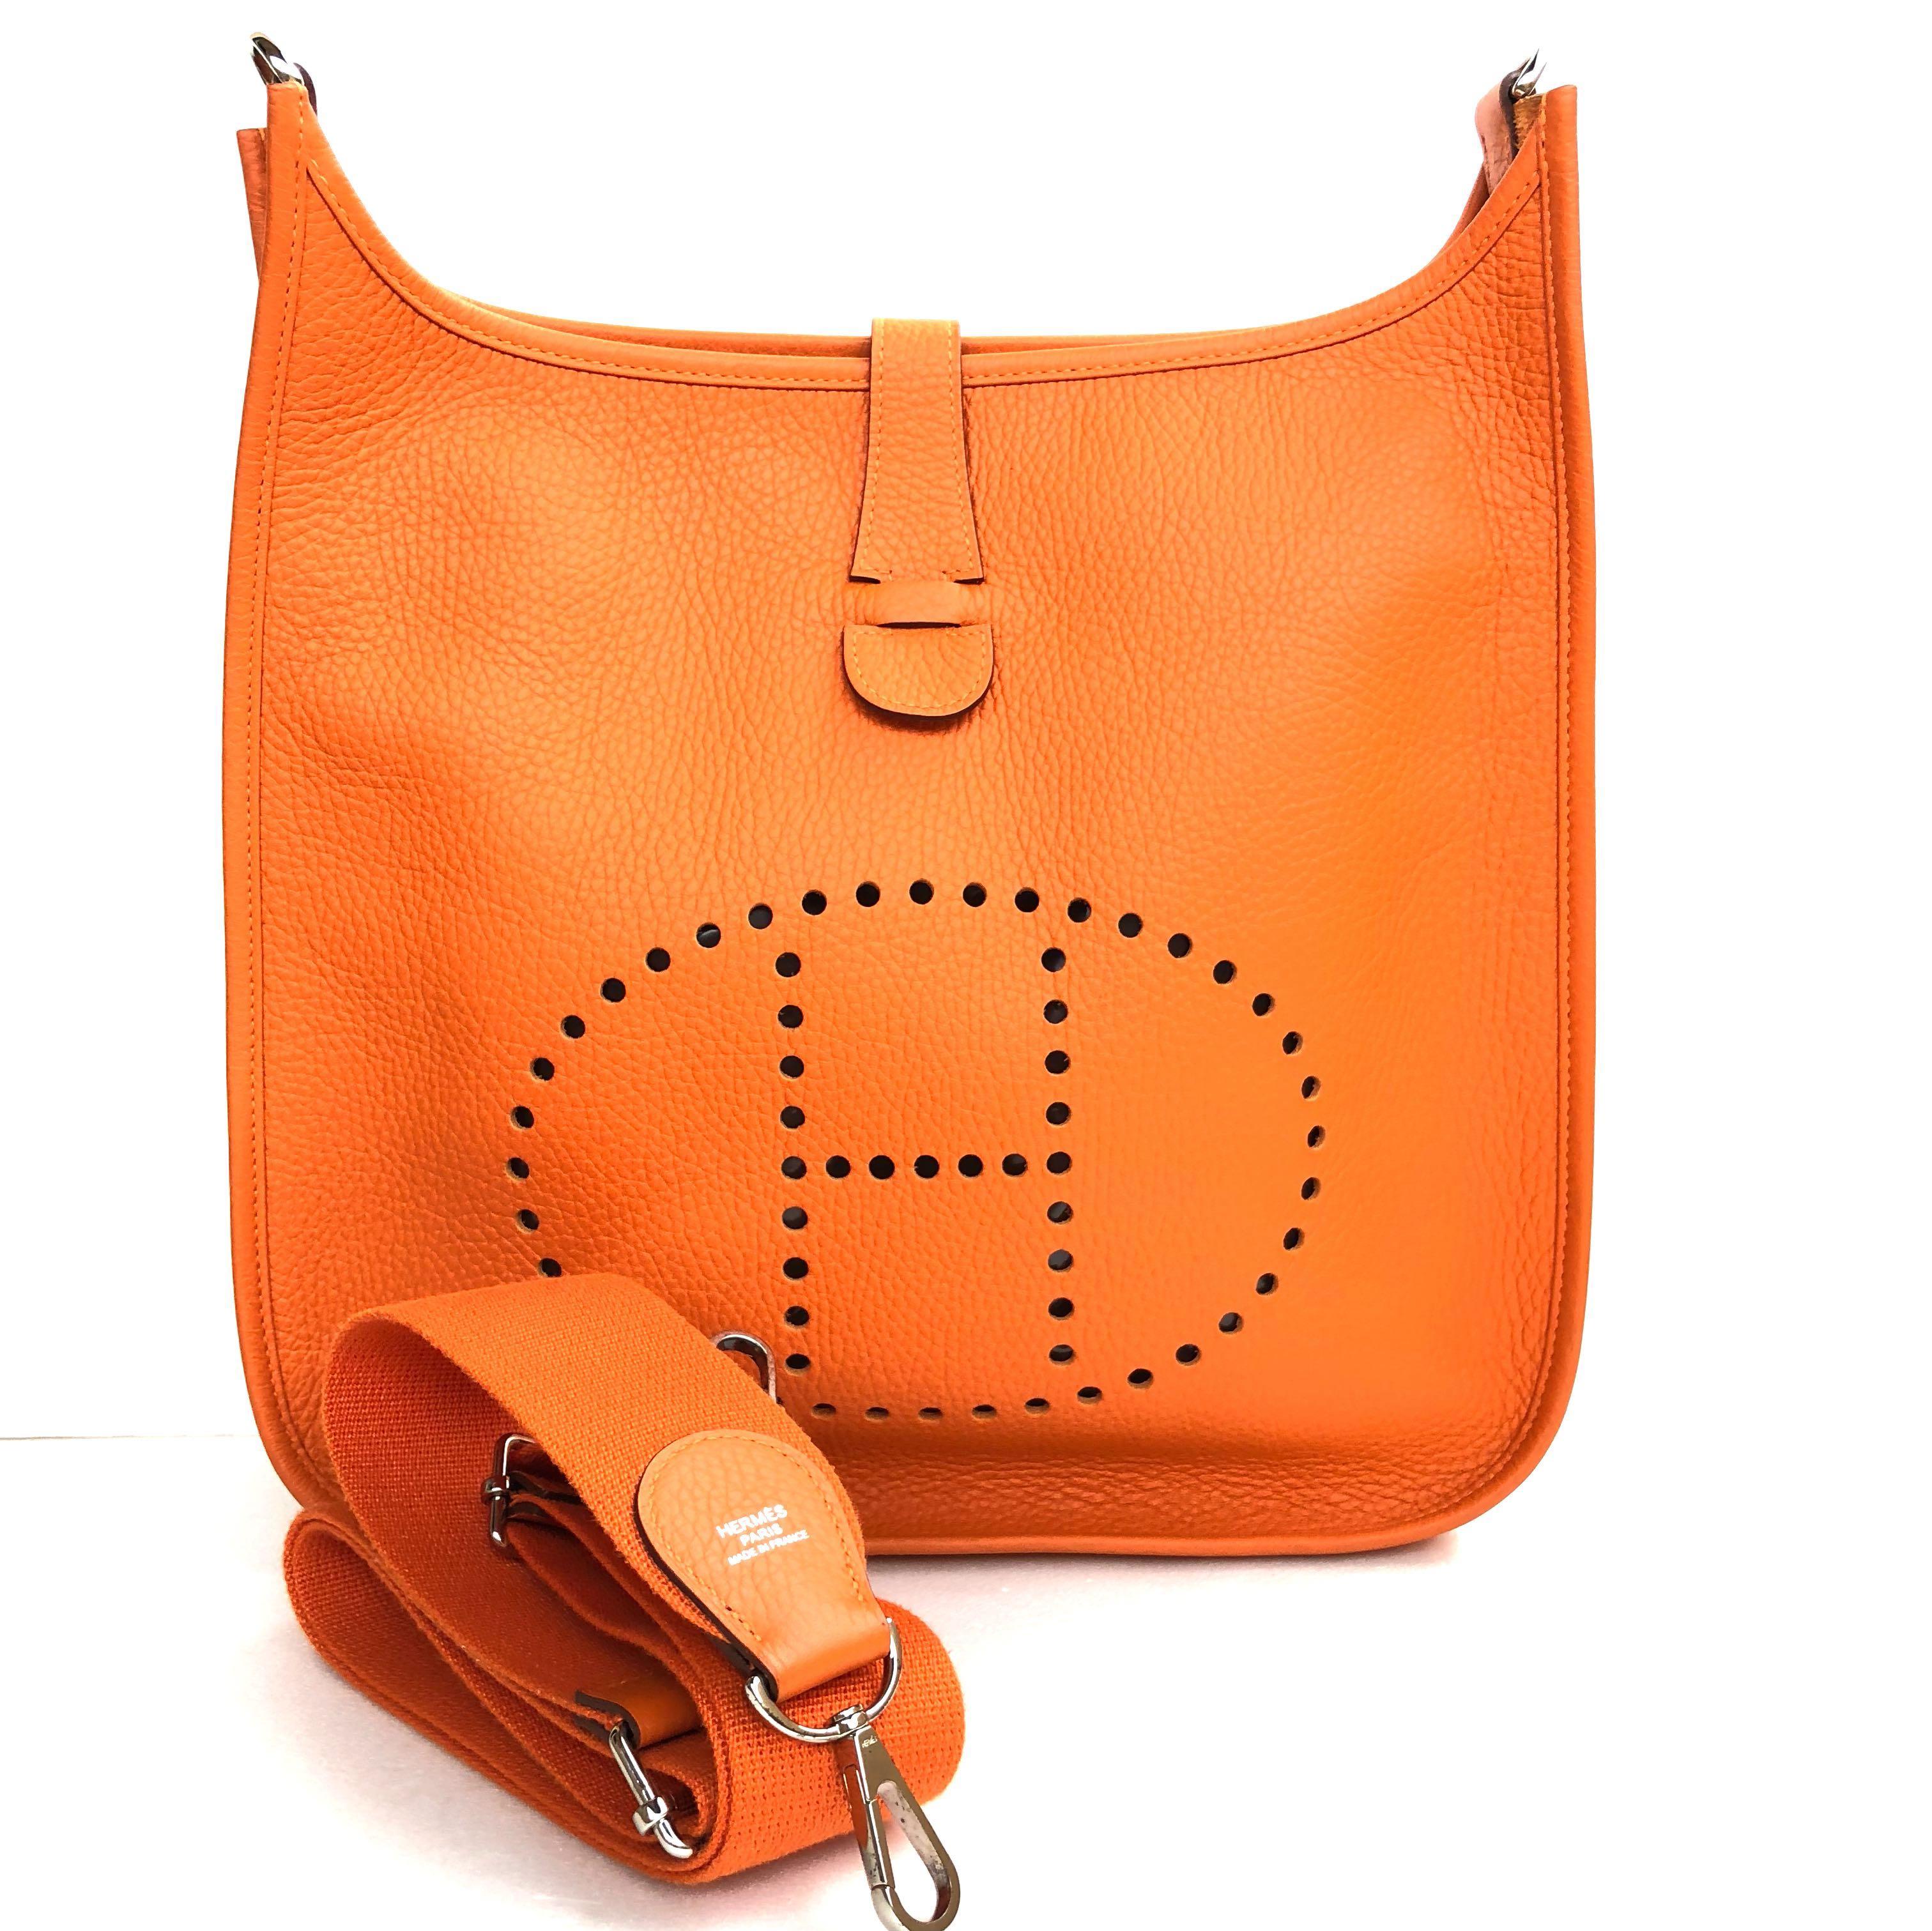 Luxury Bag Brands Singapore Sling | IQS Executive